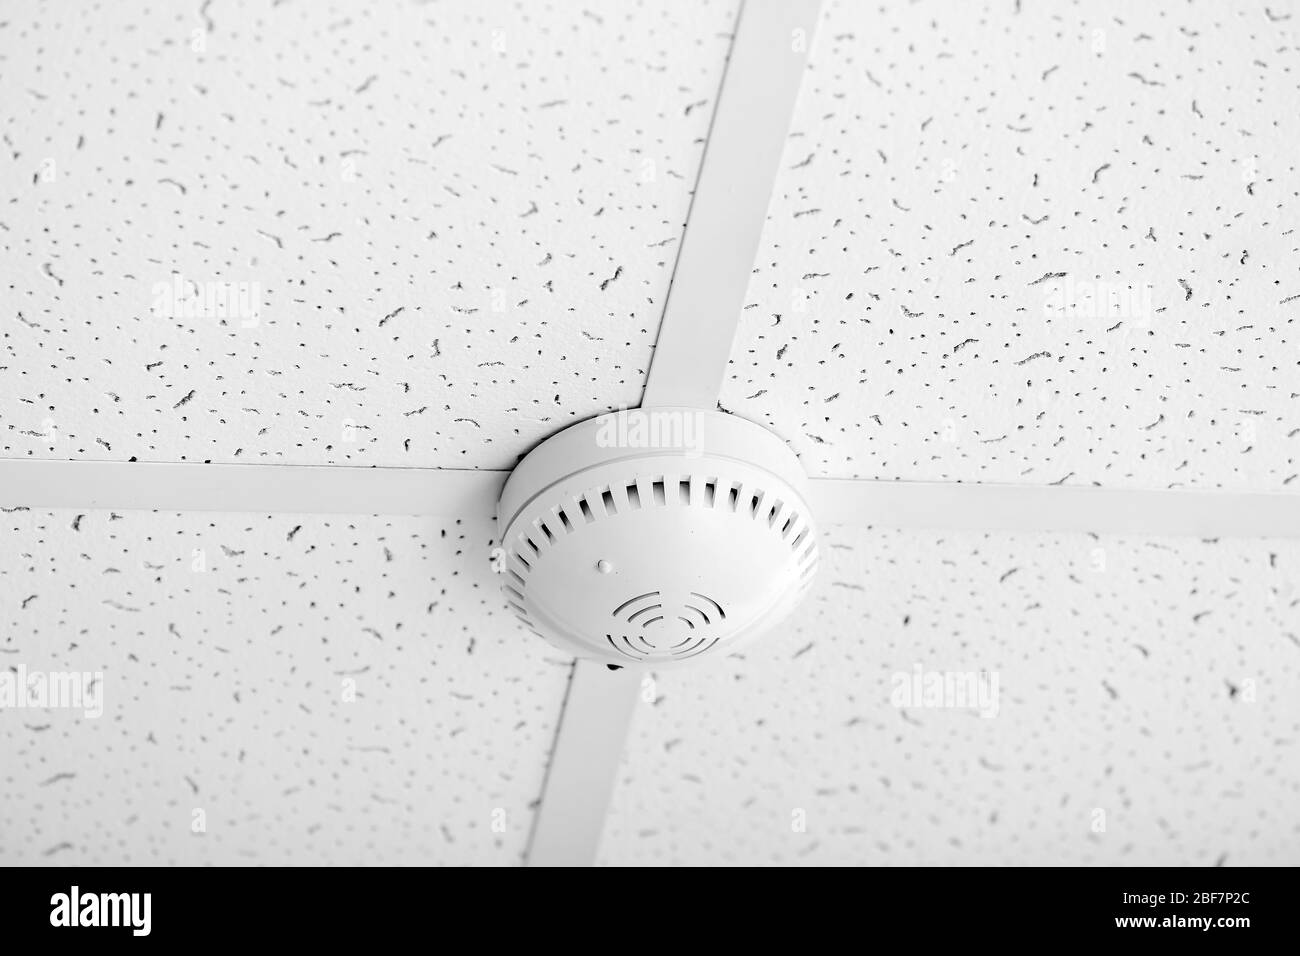 Modern smoke detector on ceiling Stock Photo